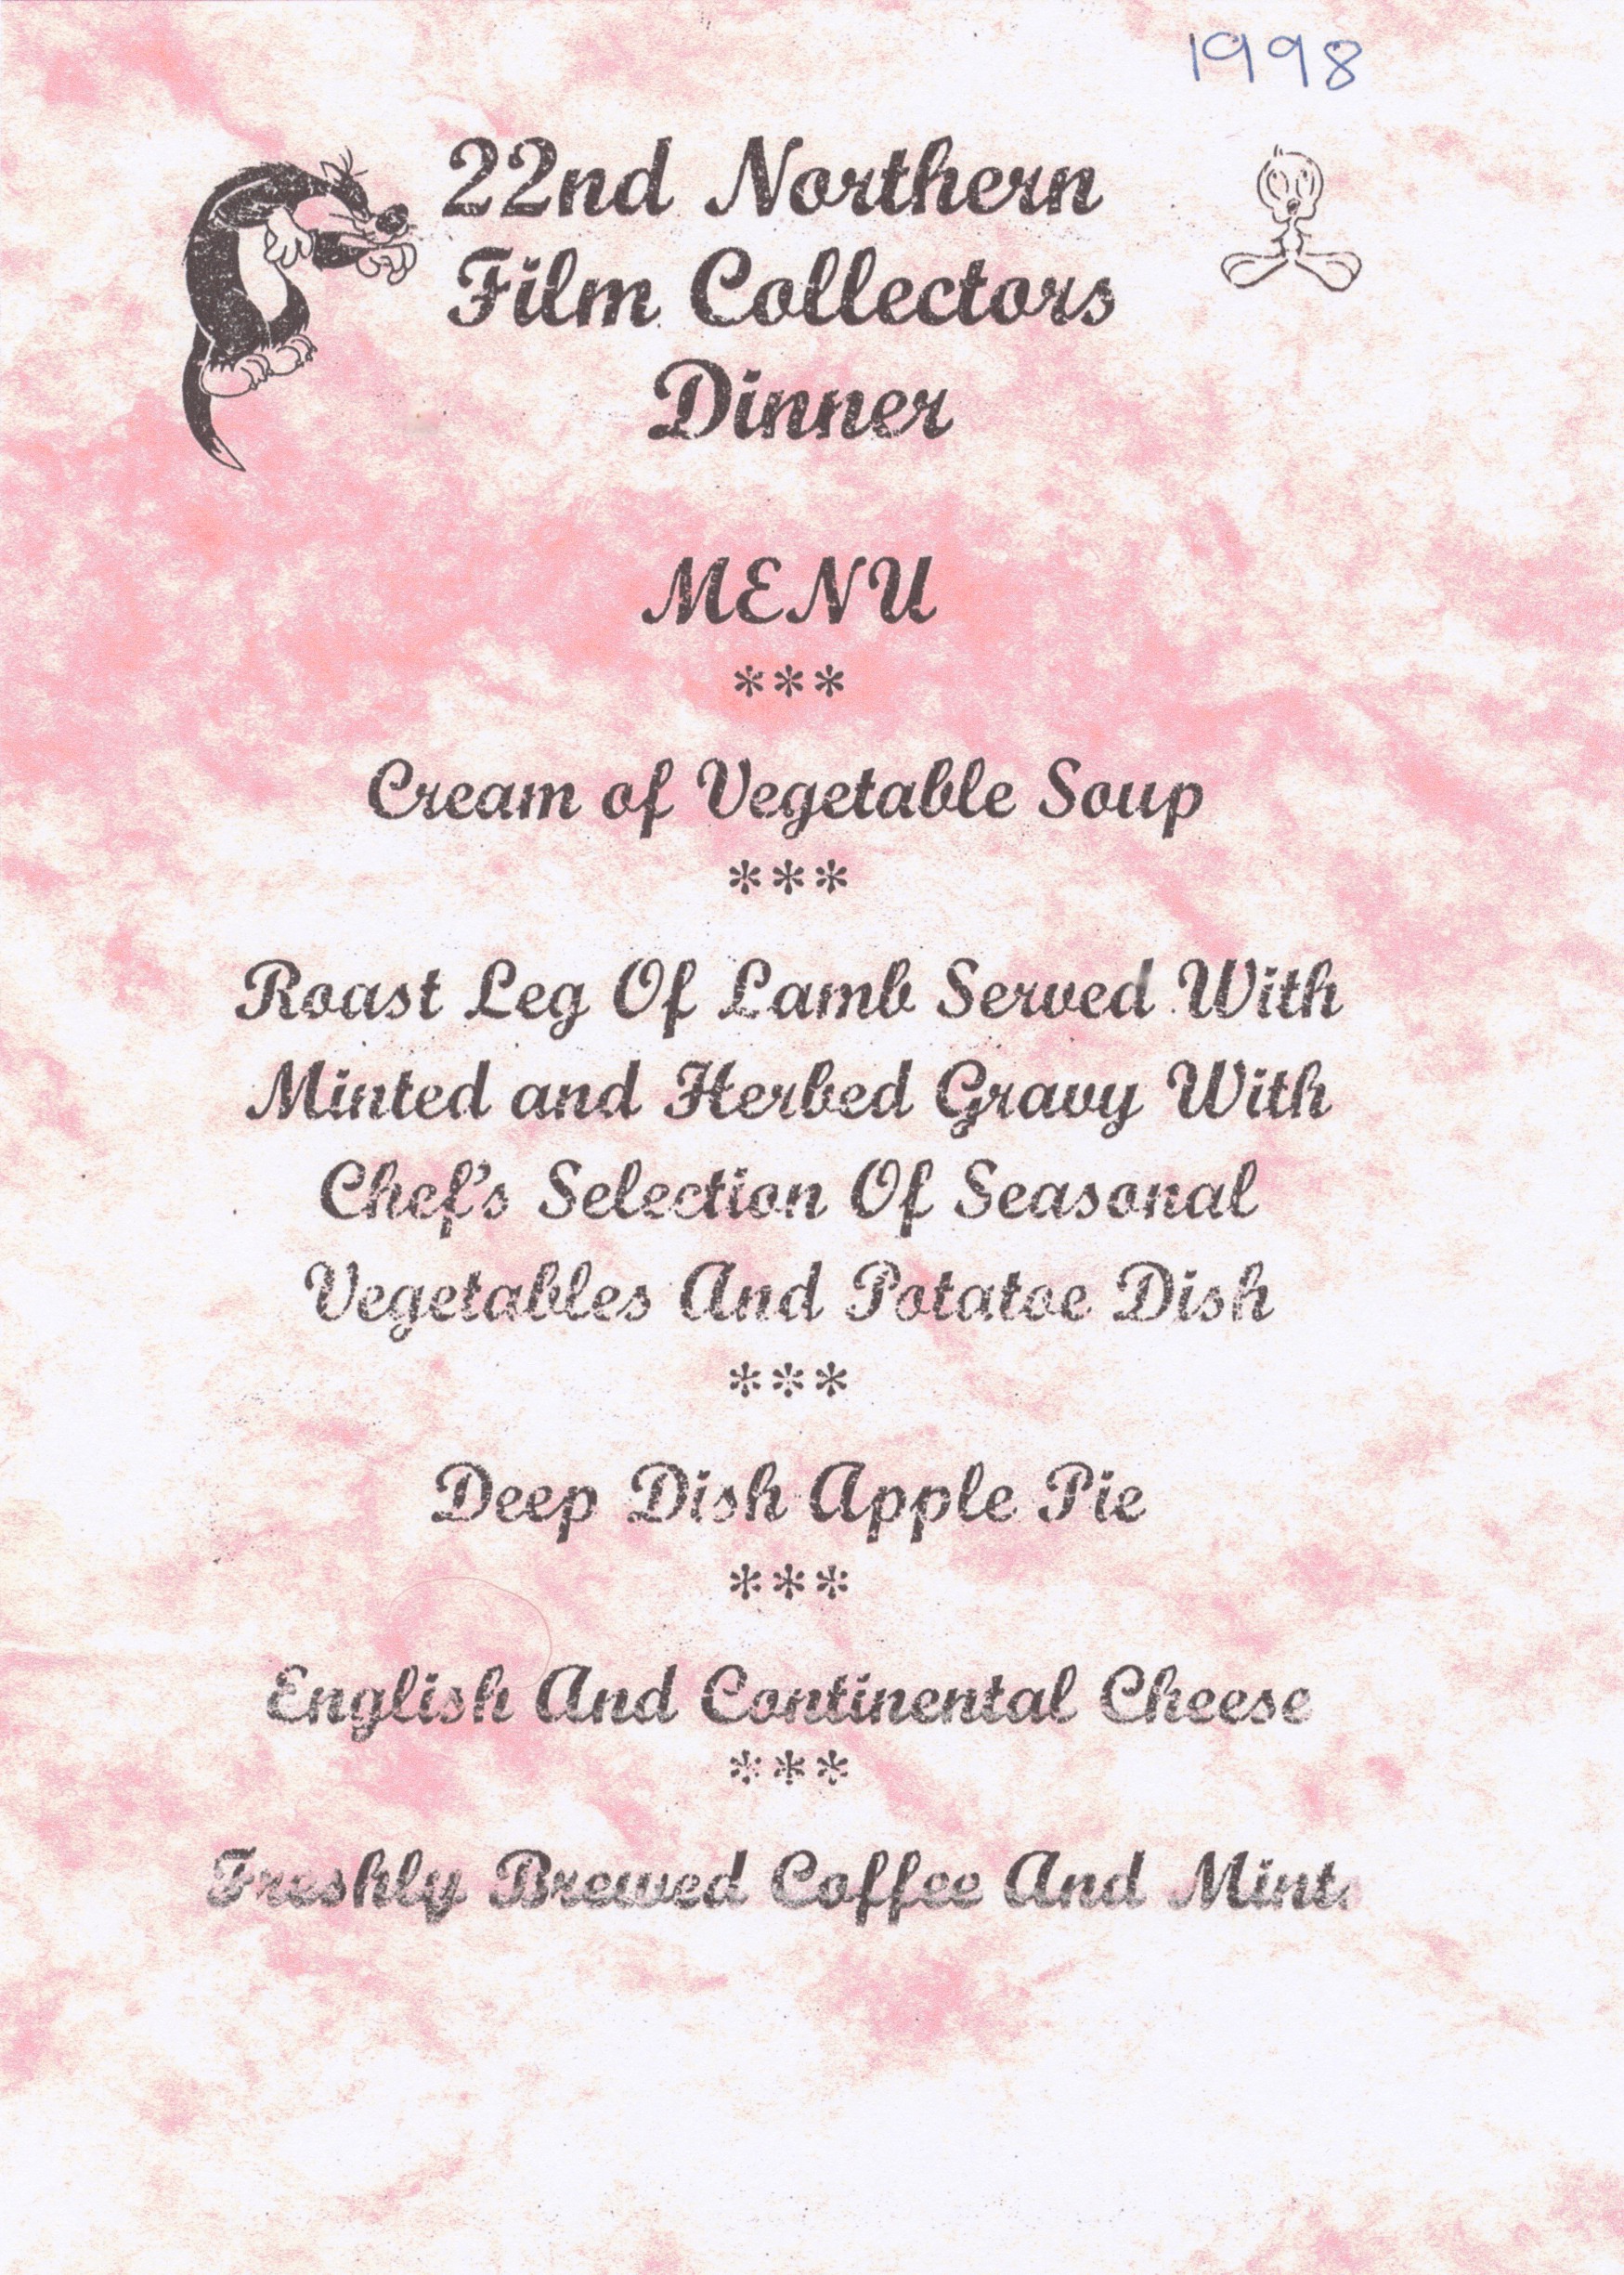 1998 Convention Dinner menu